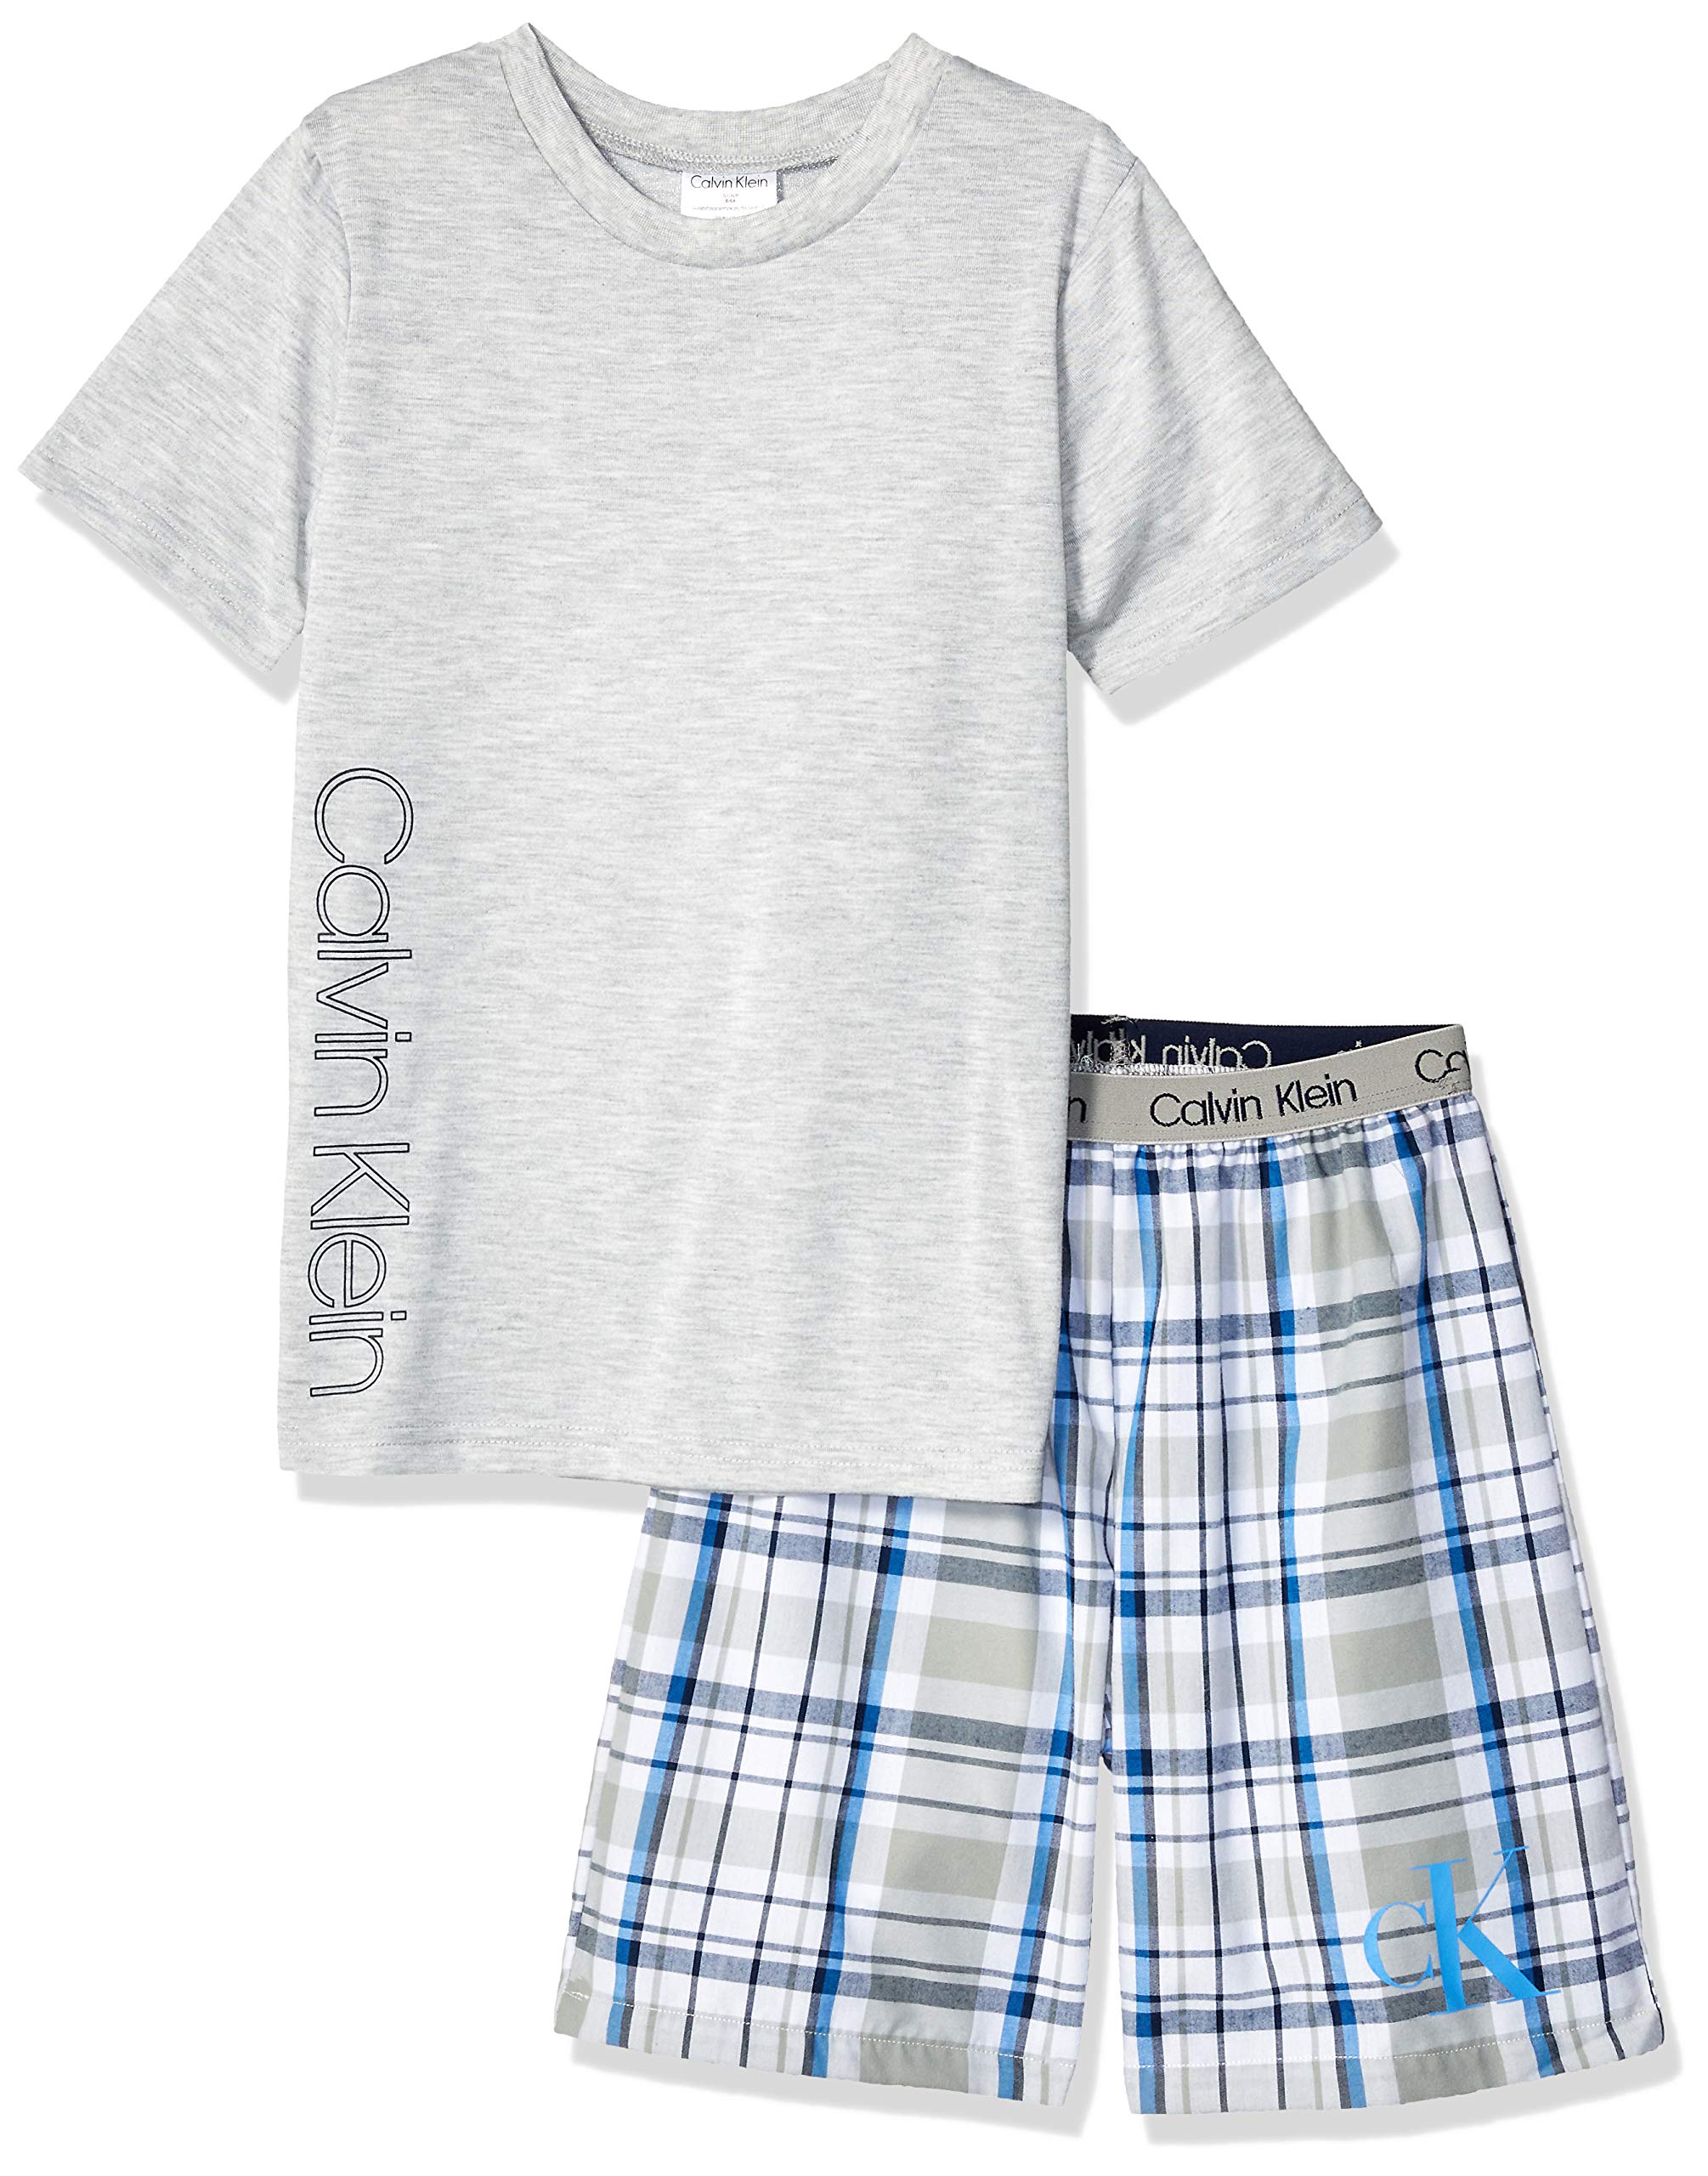 Calvin Klein Boys' Little 2 Piece Sleepwear Top and Bottom Pajama Set Pj